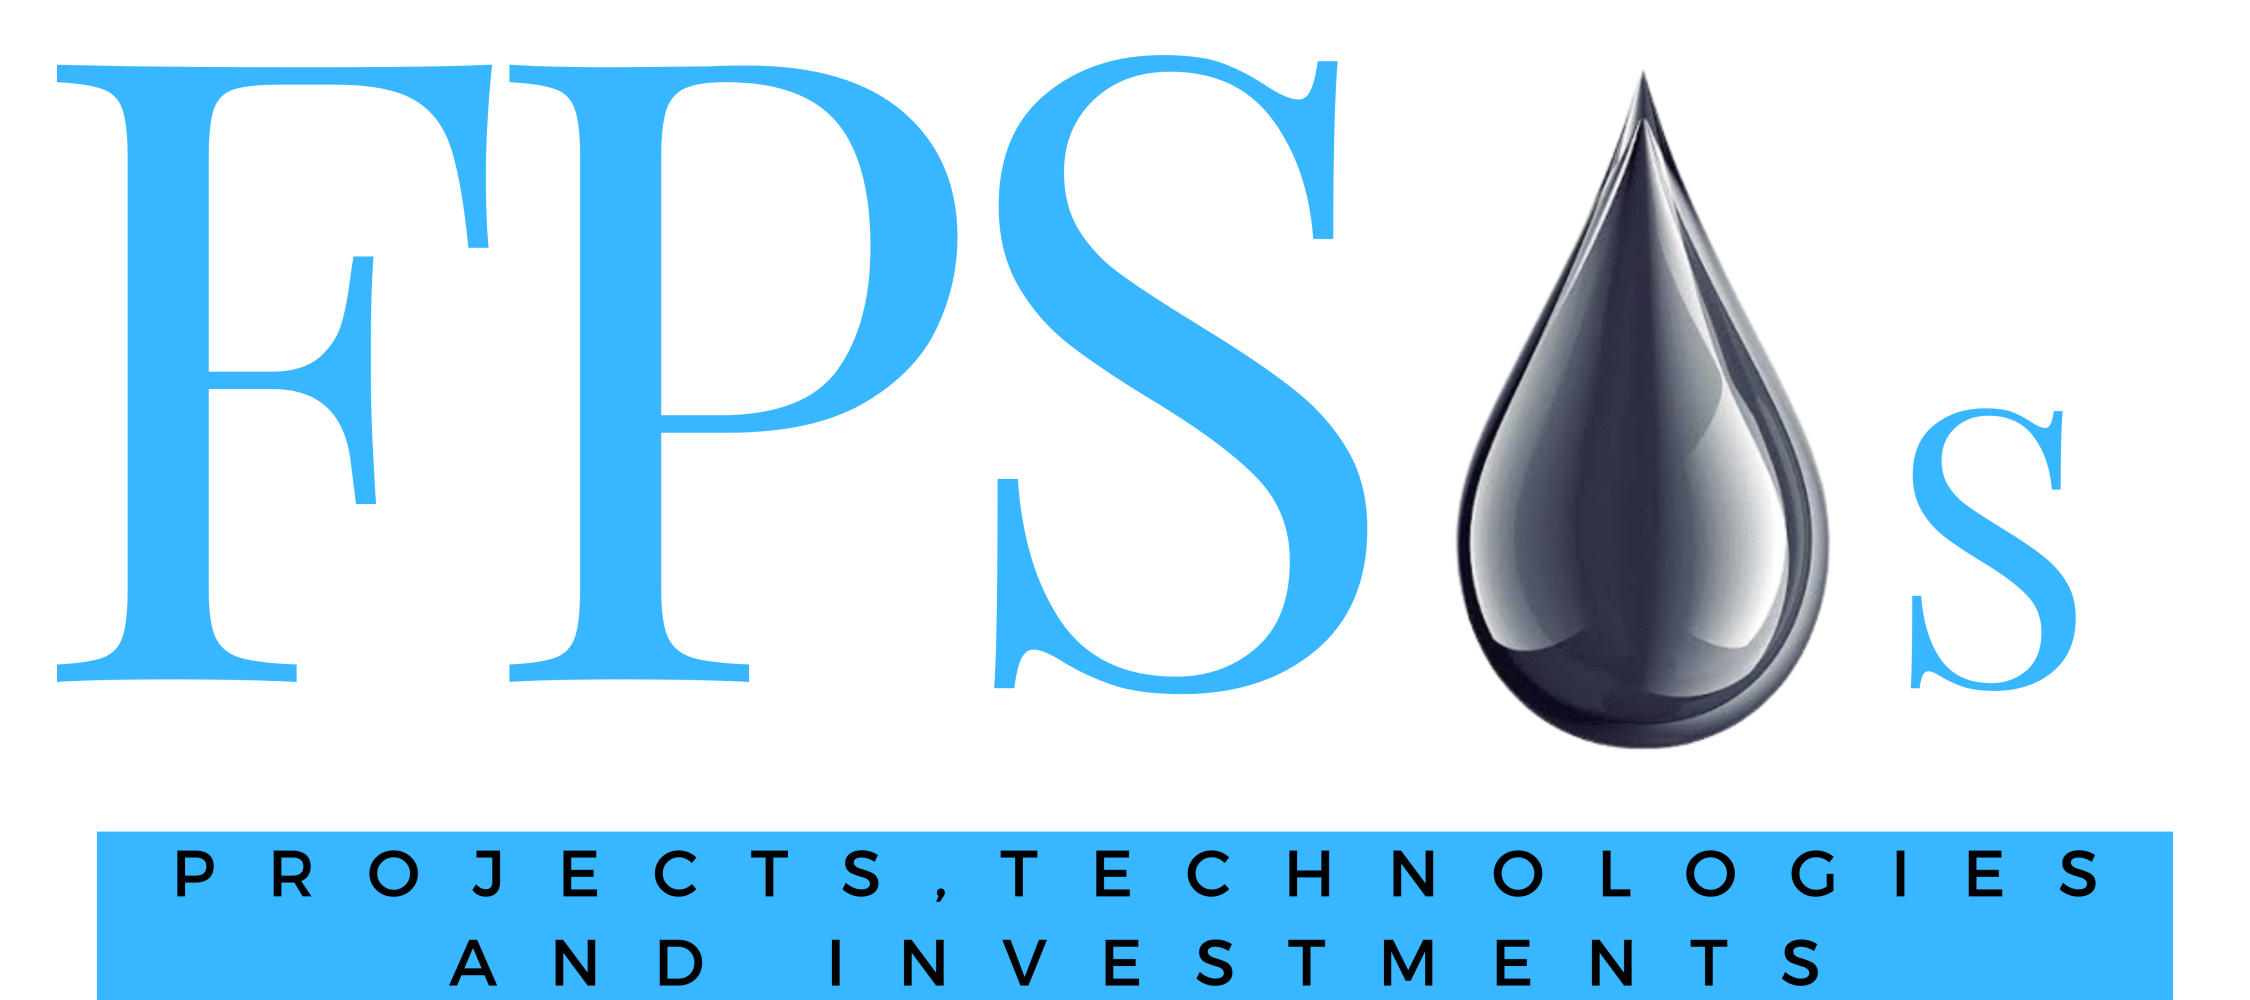 FPSOs_Logo